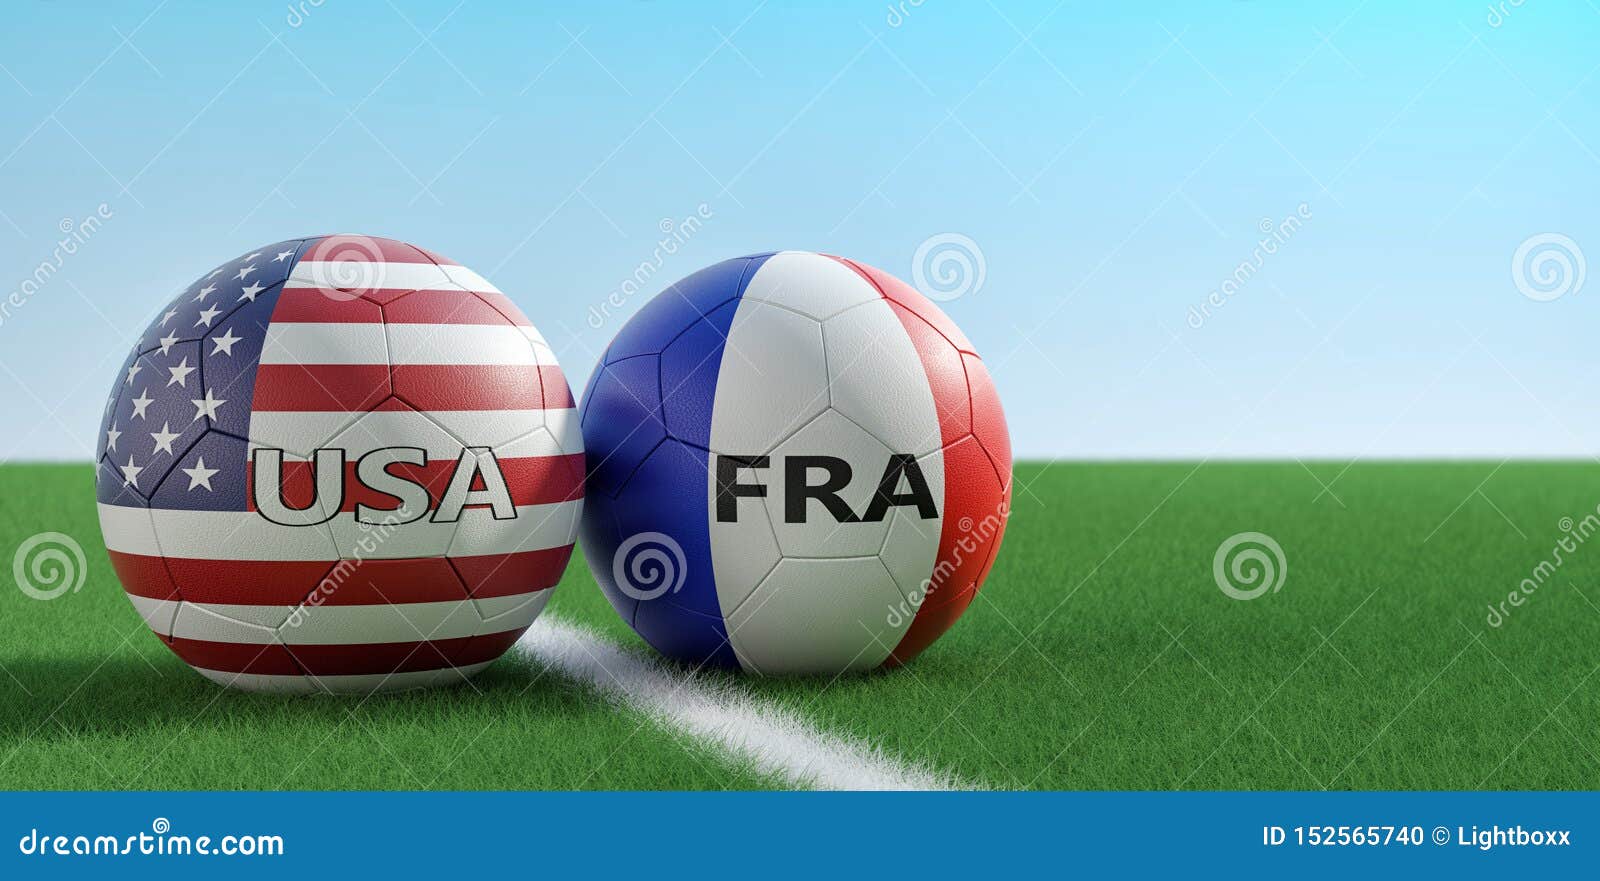 France Vs. USA Soccer Match - Soccer Balls in France and USA National